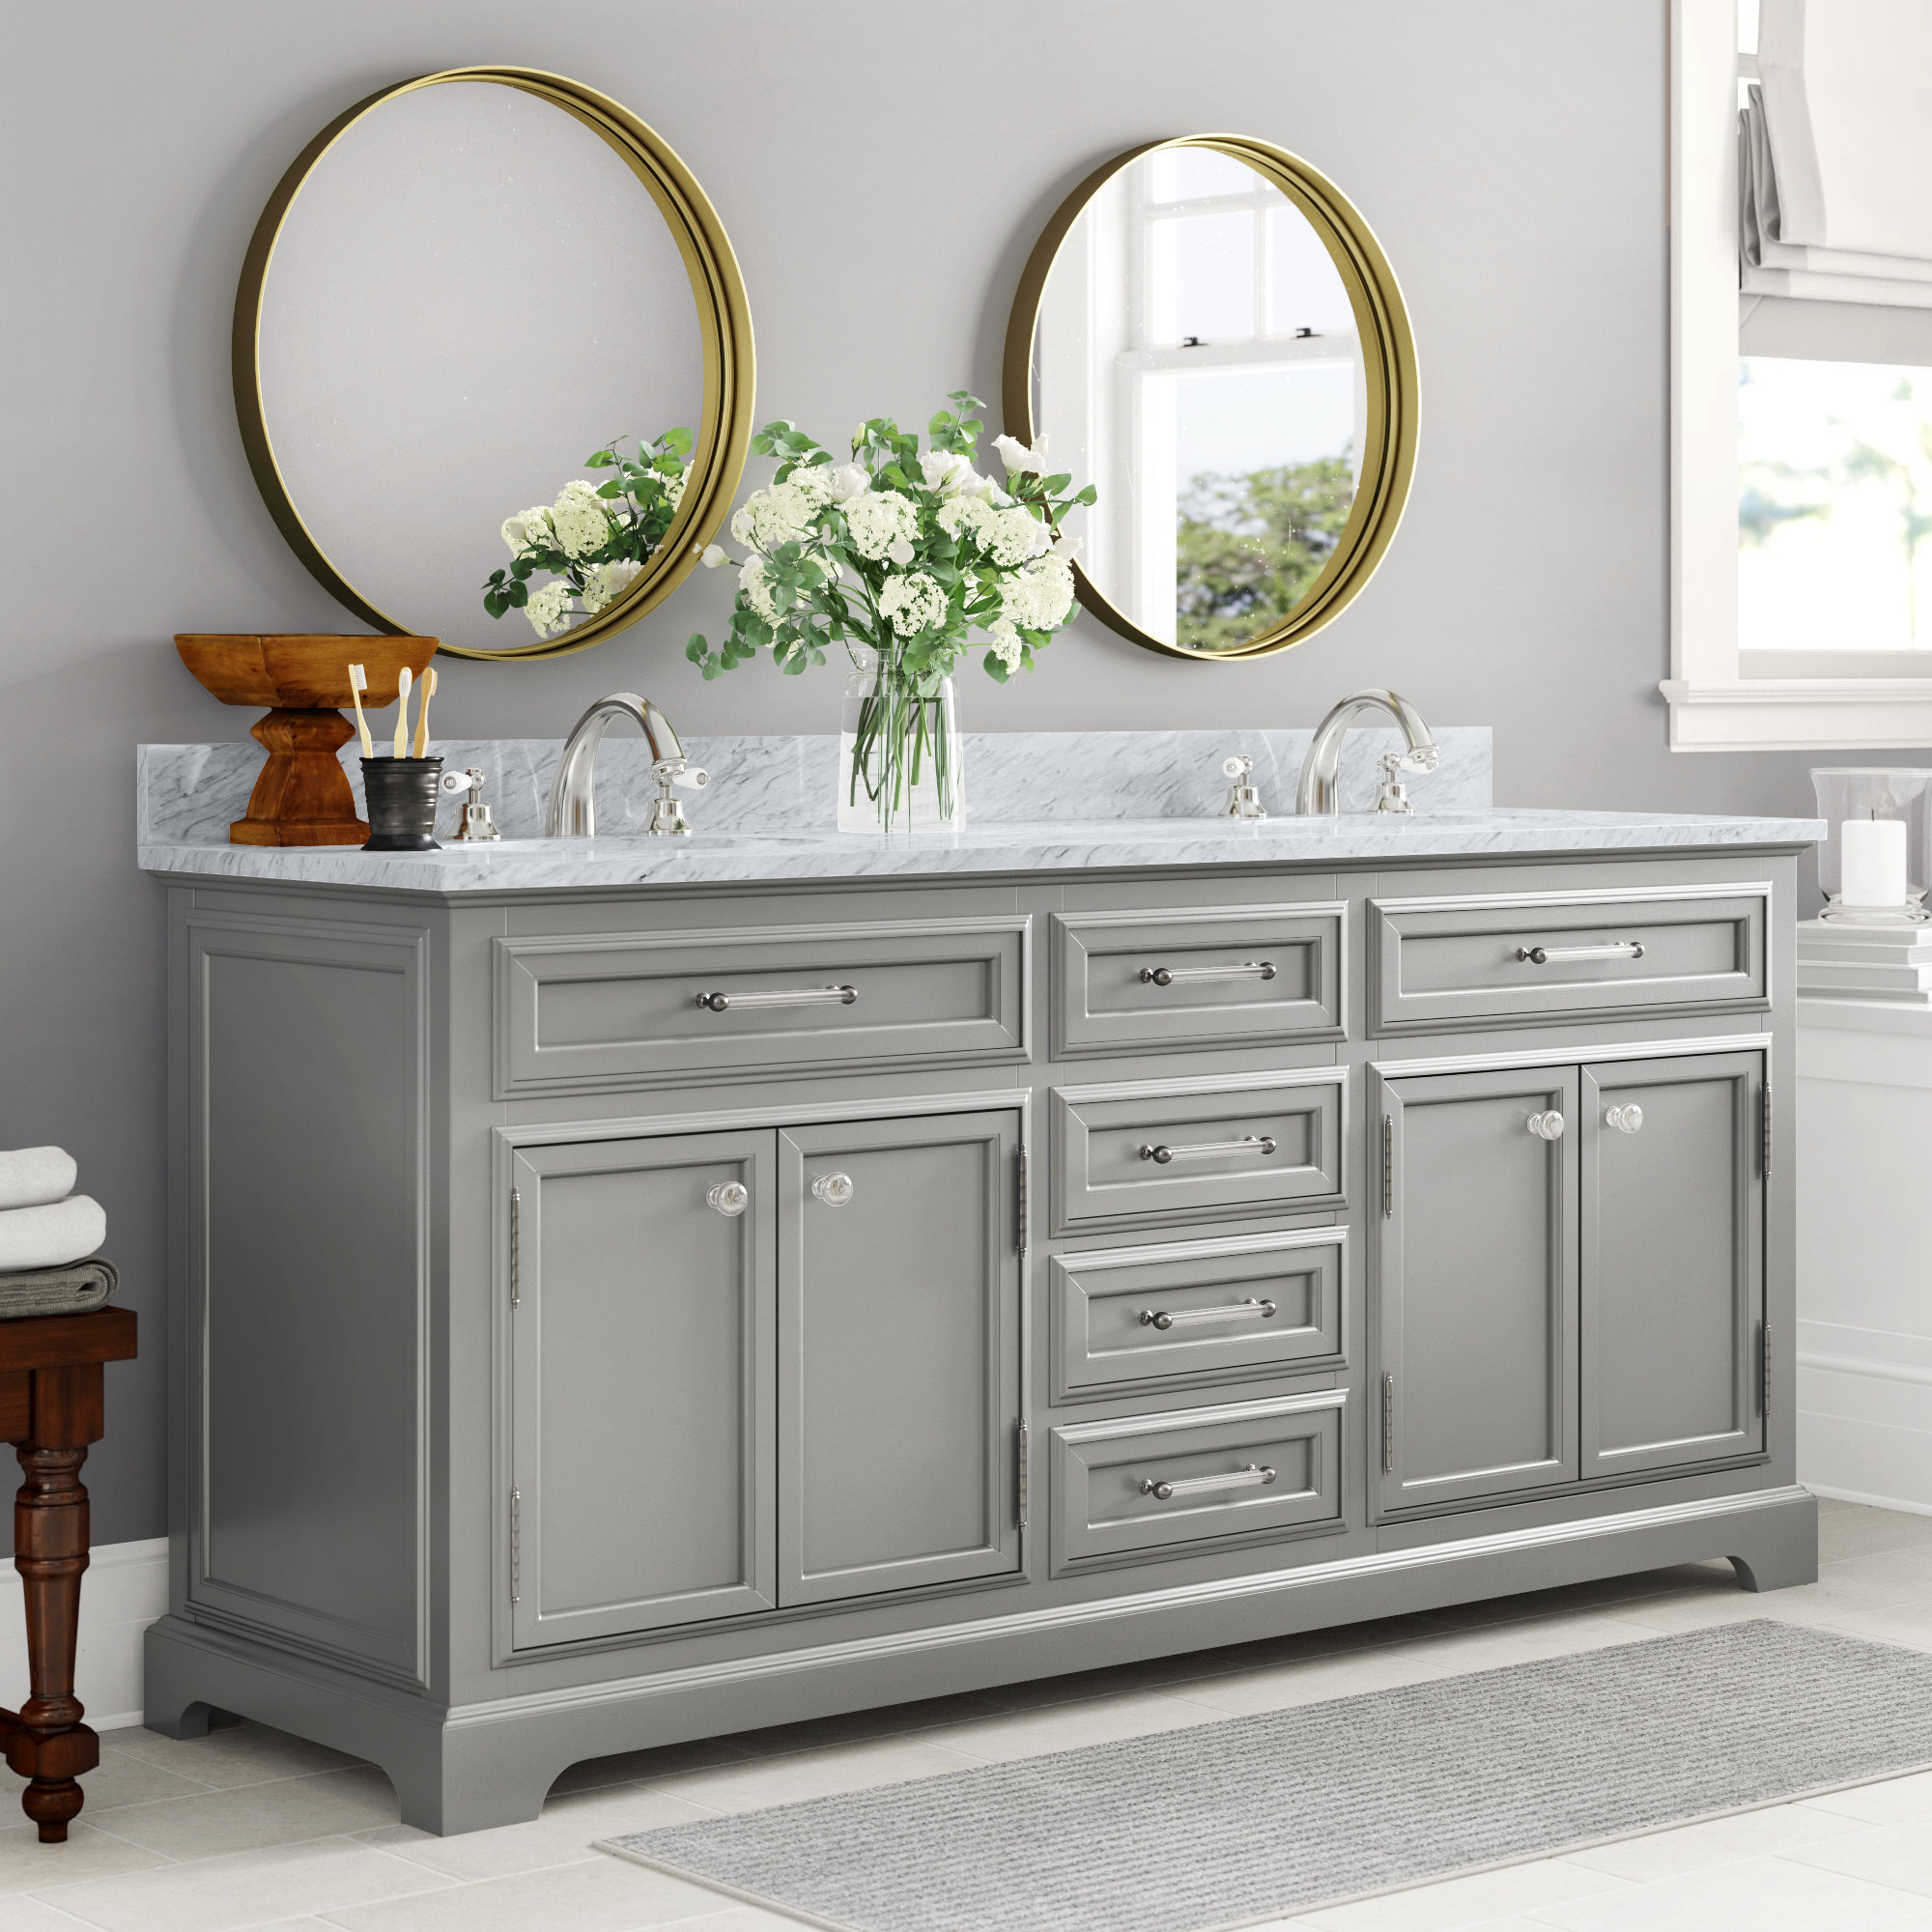 Bathroom Vanity Double Sink Dimensions - BEST HOME DESIGN IDEAS